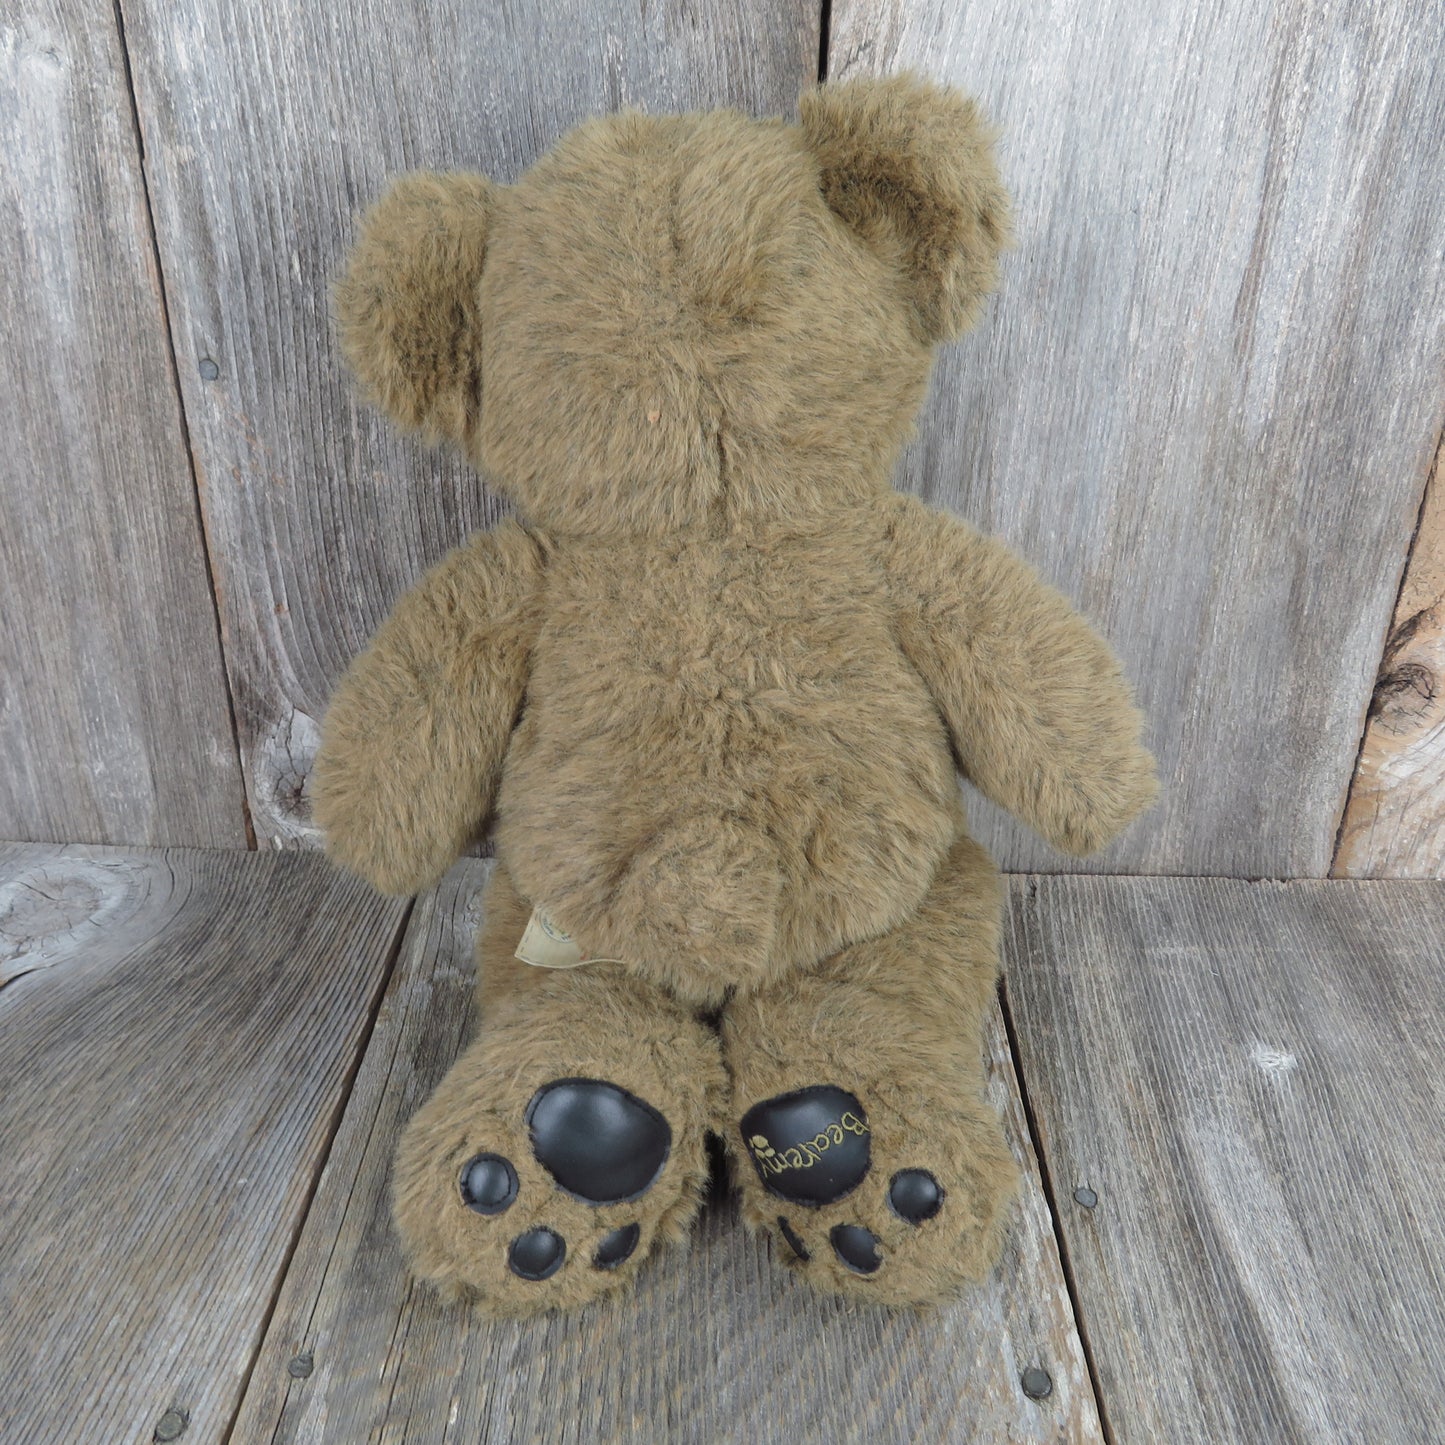 Vintage Teddy Bear Bearemy Plush Build A Bear Brown BAB 1999 Mascott Foot Pads Stuffed Animal - At Grandma's Table